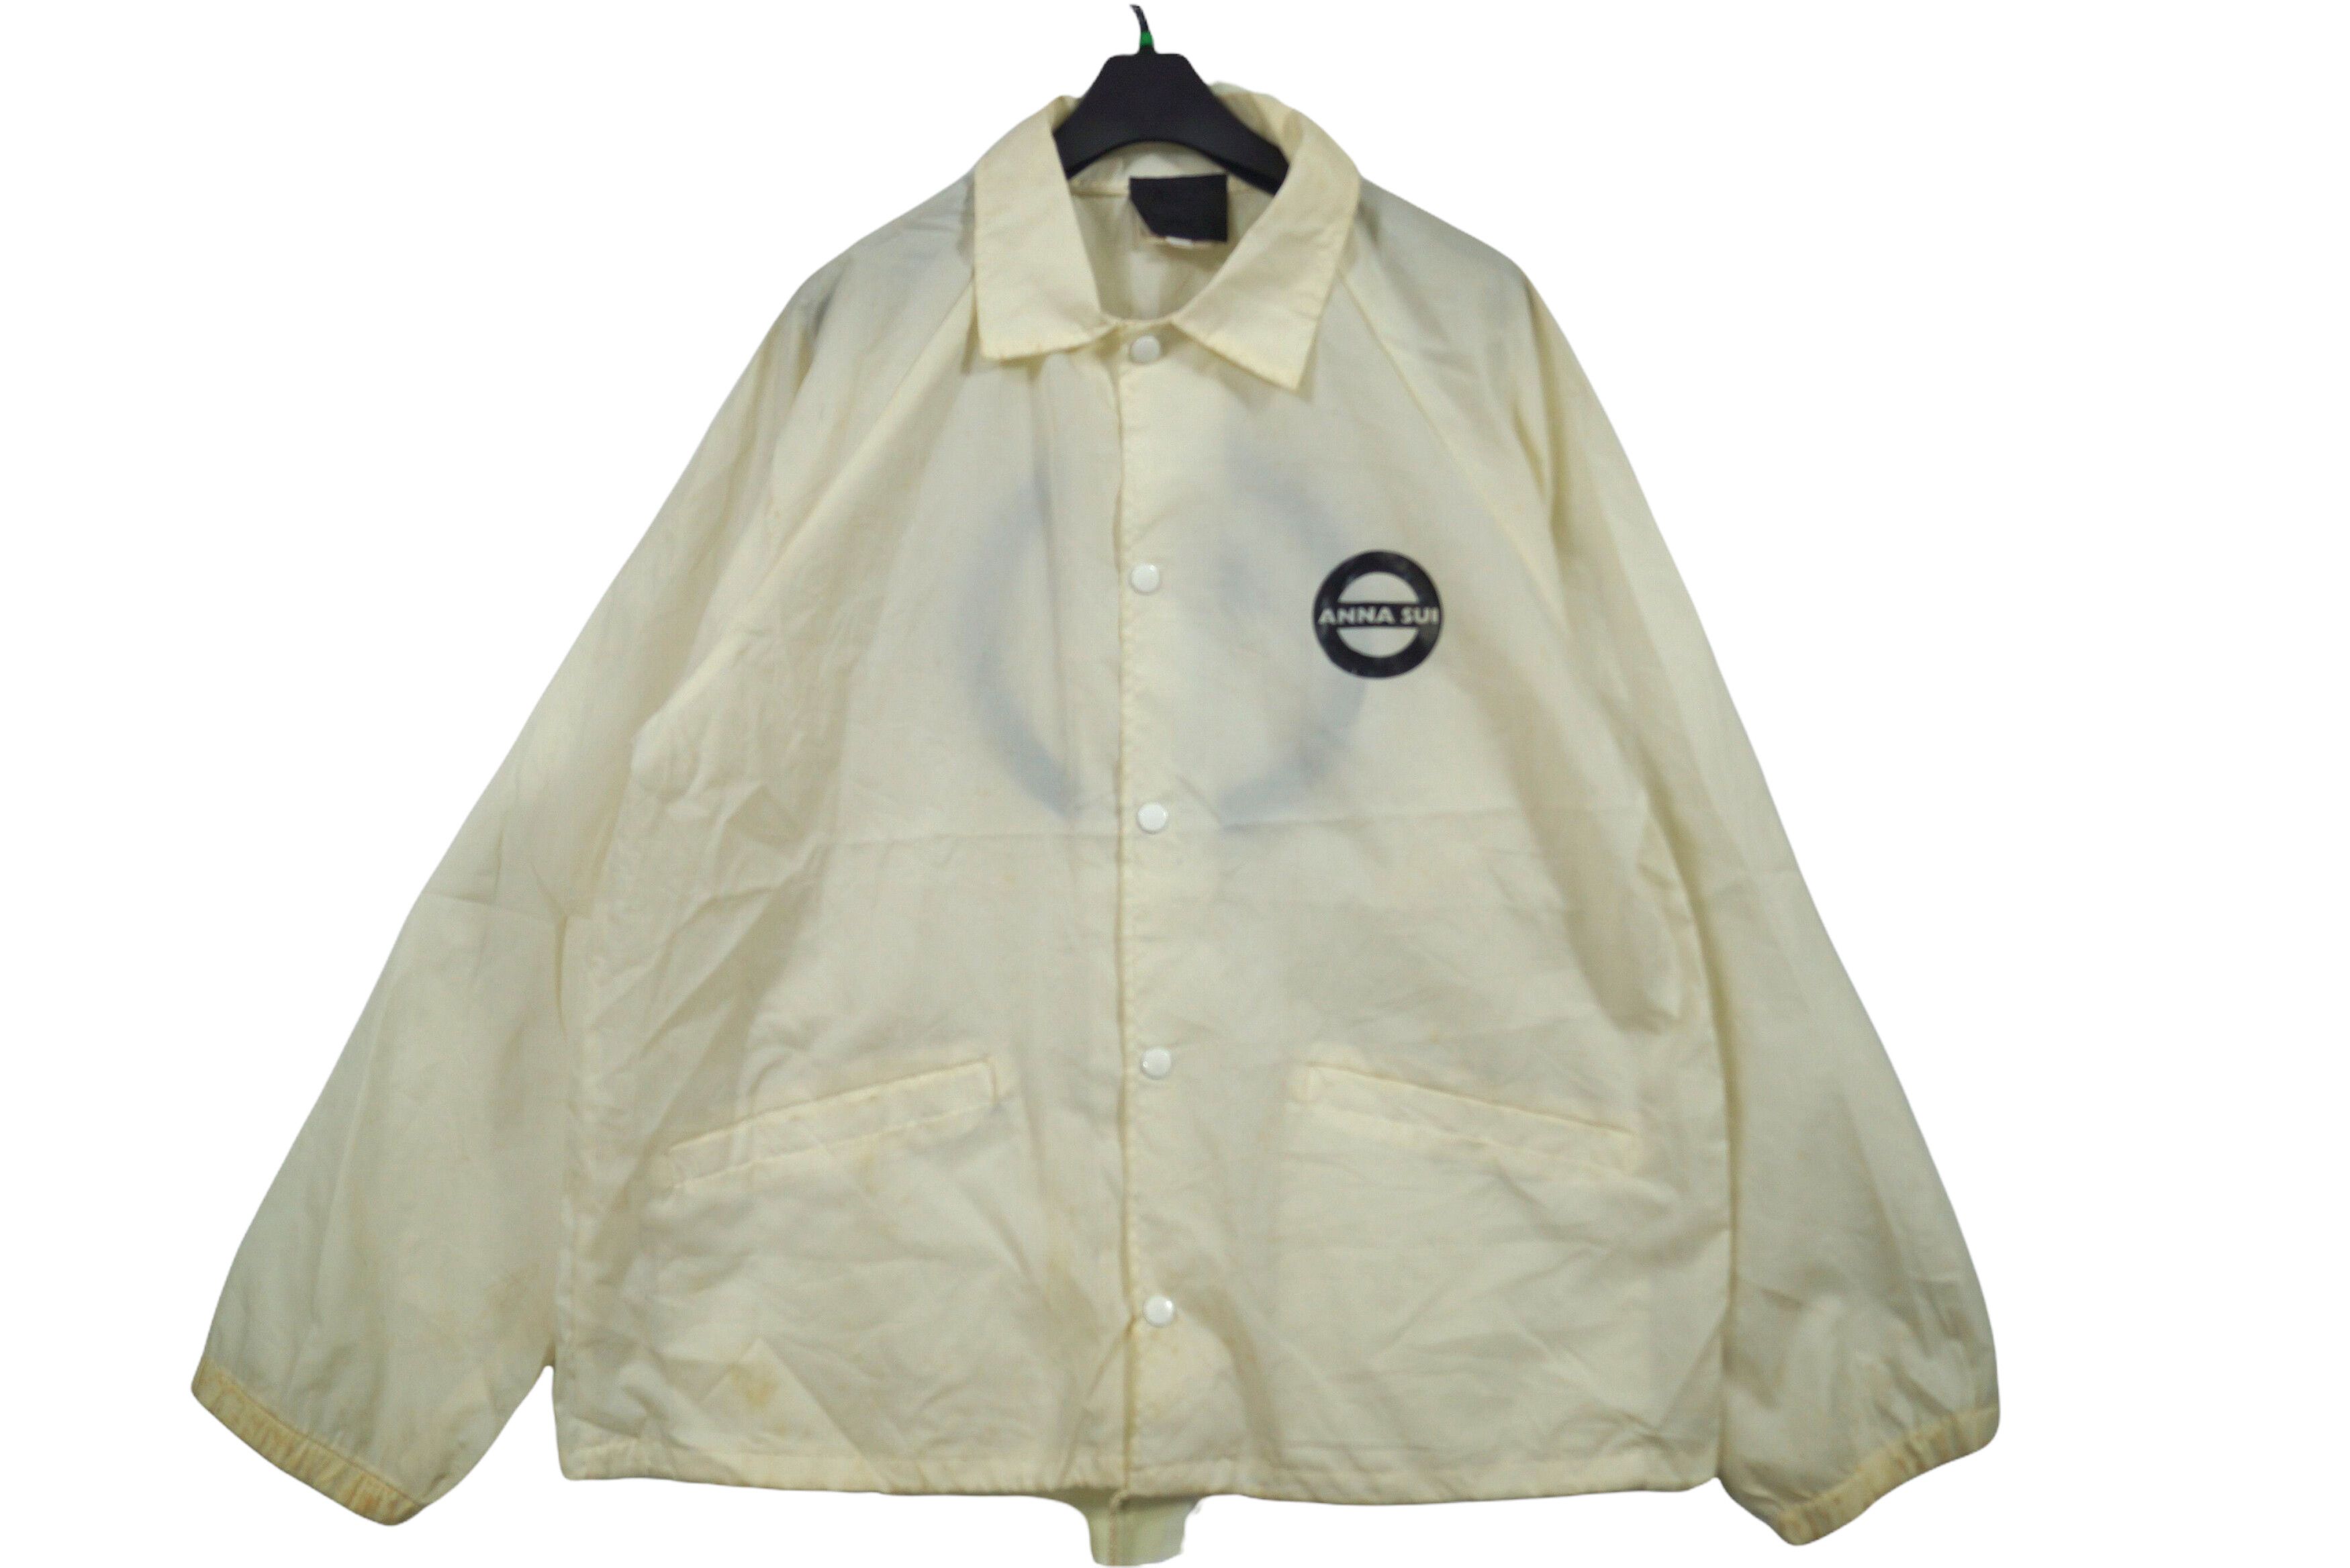 Vintage Rare!! Vintage Jacket Windbreaker Anna Sui Small Logo Size US L / EU 52-54 / 3 - 1 Preview